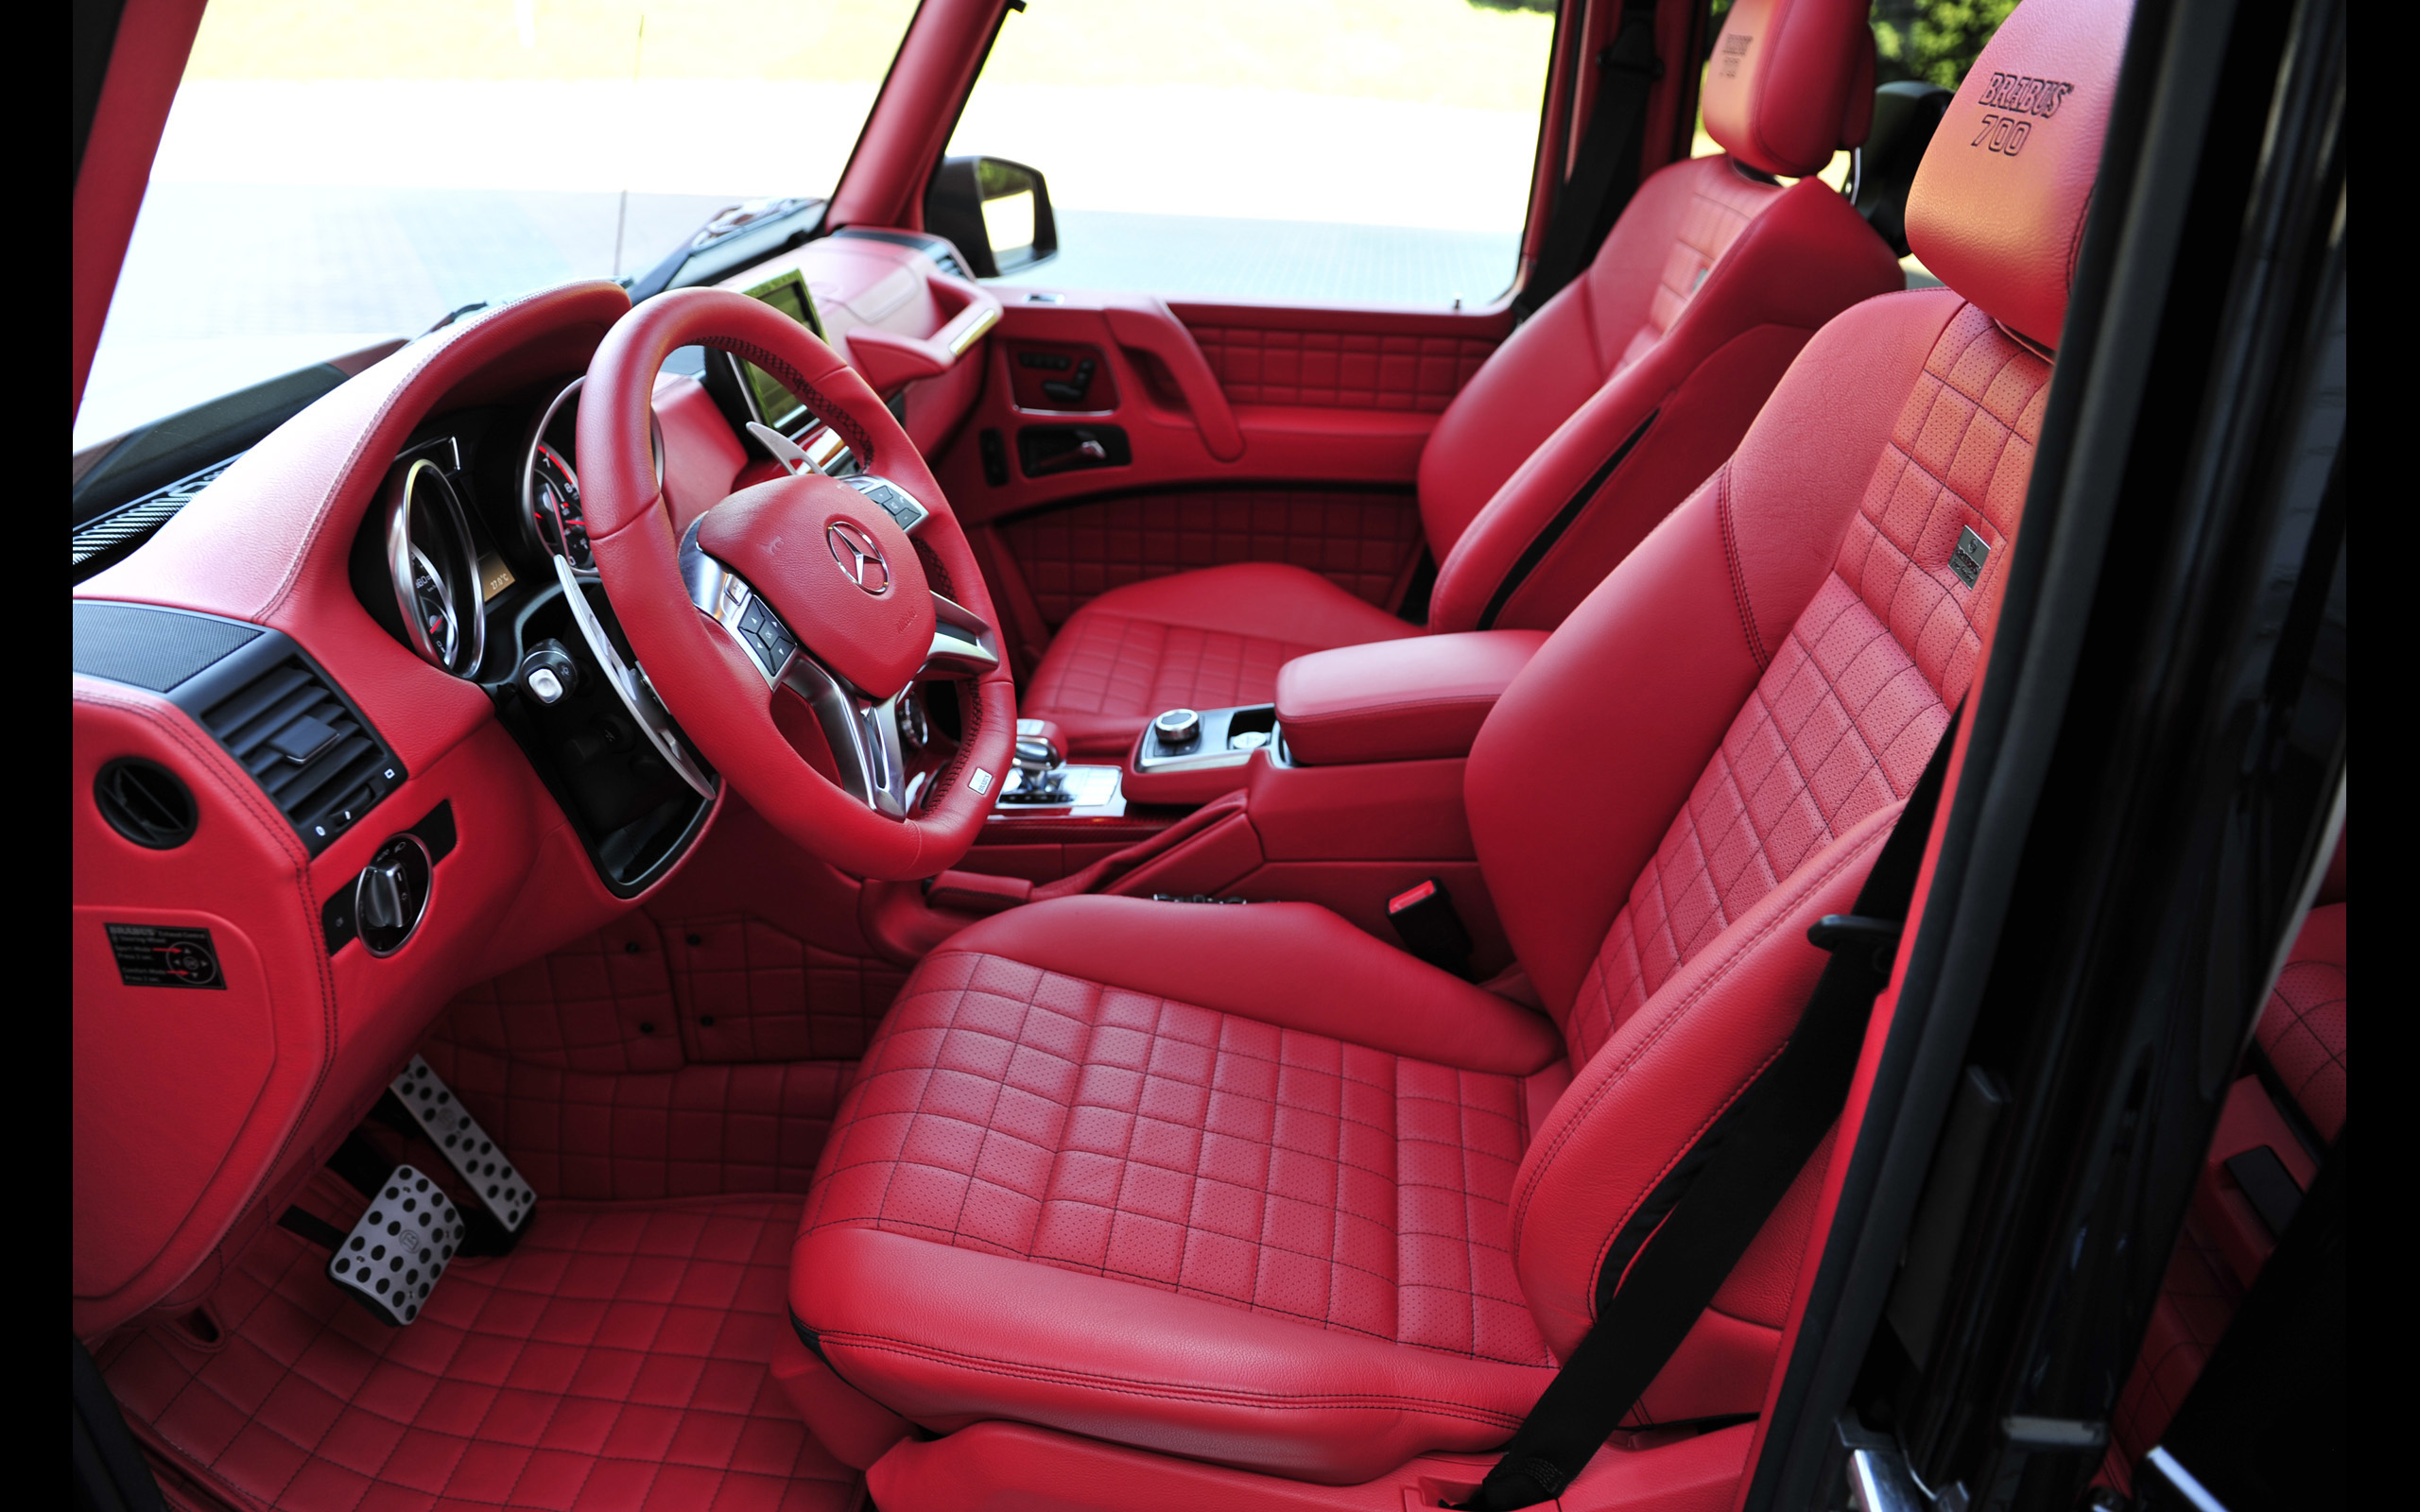 2013-Brabus-Mercedes-Benz-B63S-700-6-6-Interior-1-2560x1600.jpg